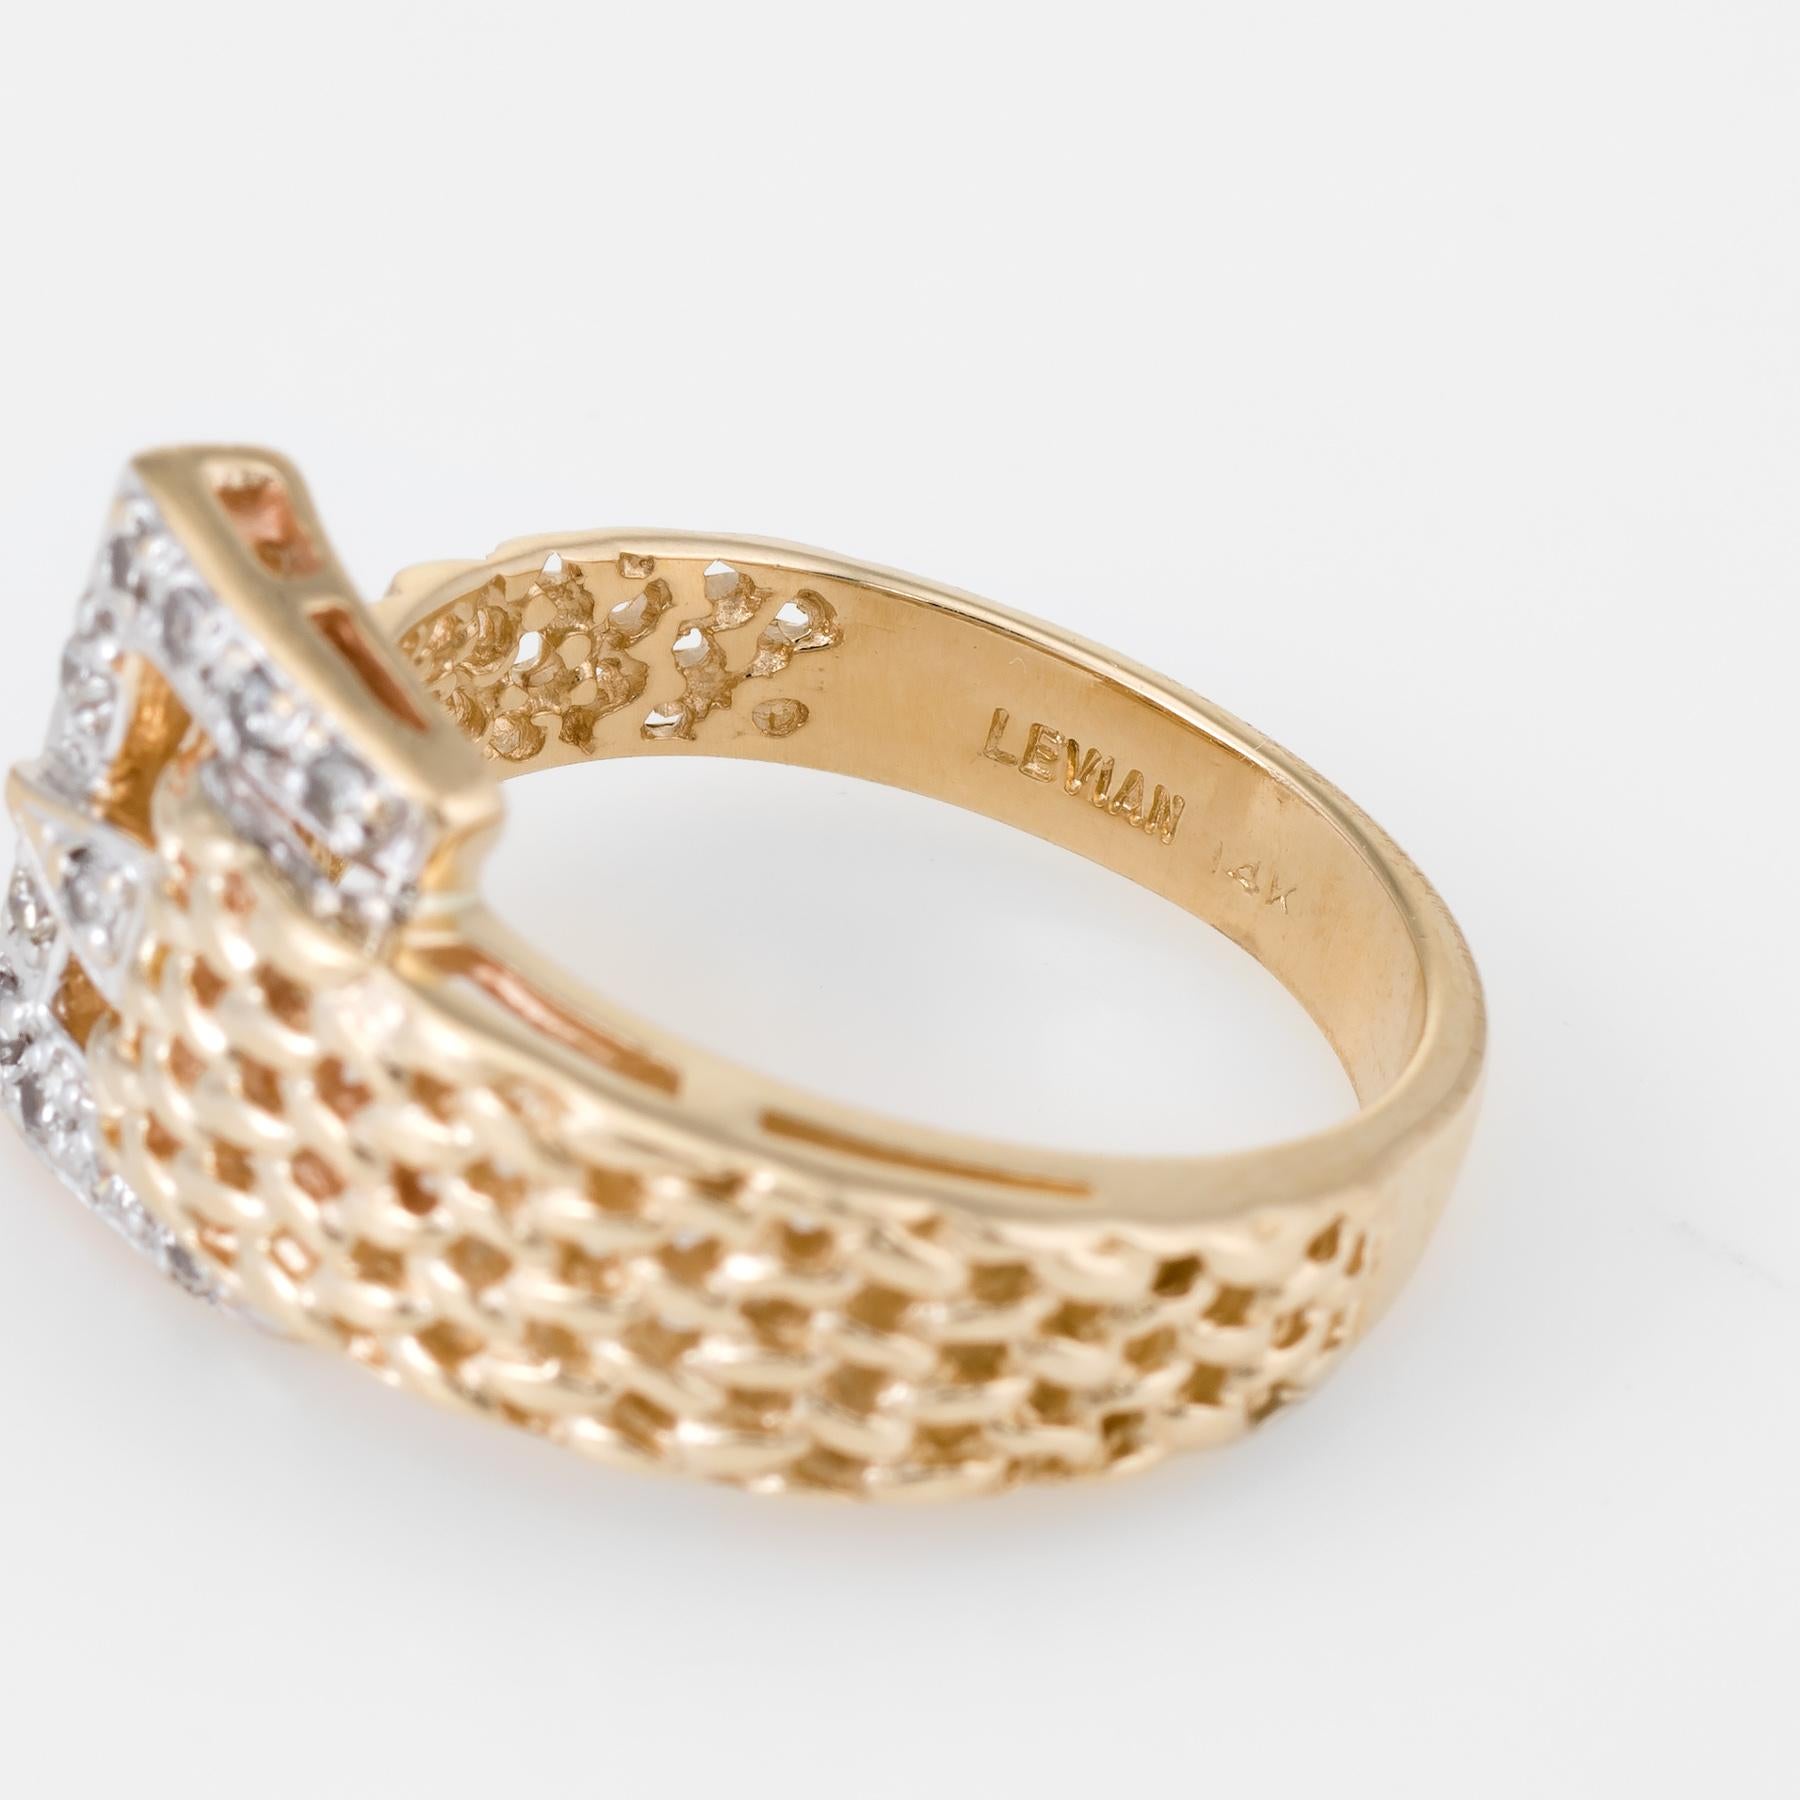 LeVian Diamond Buckle Ring Estate 14 Karat Yellow Gold Fine Designer Jewelry 2